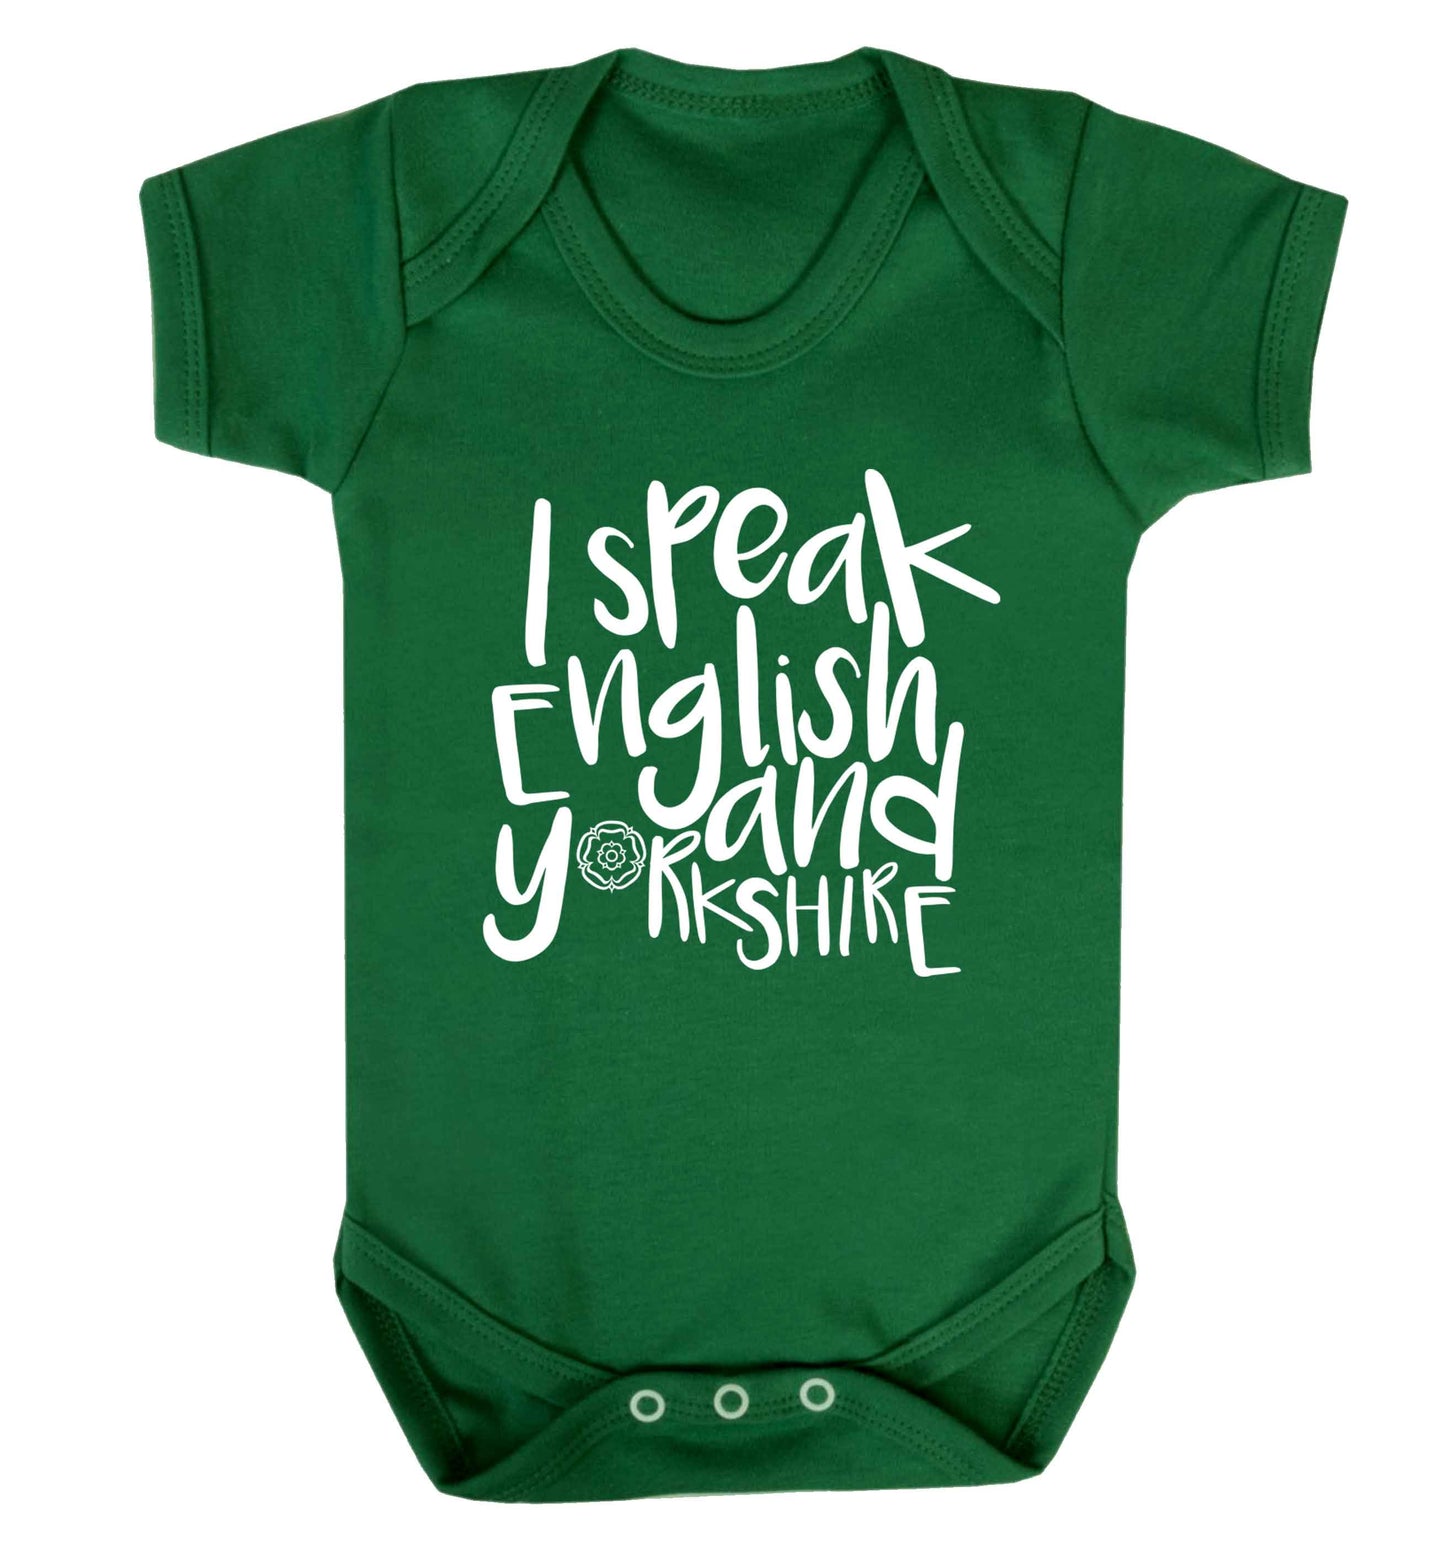 I speak English and Yorkshire Baby Vest green 18-24 months